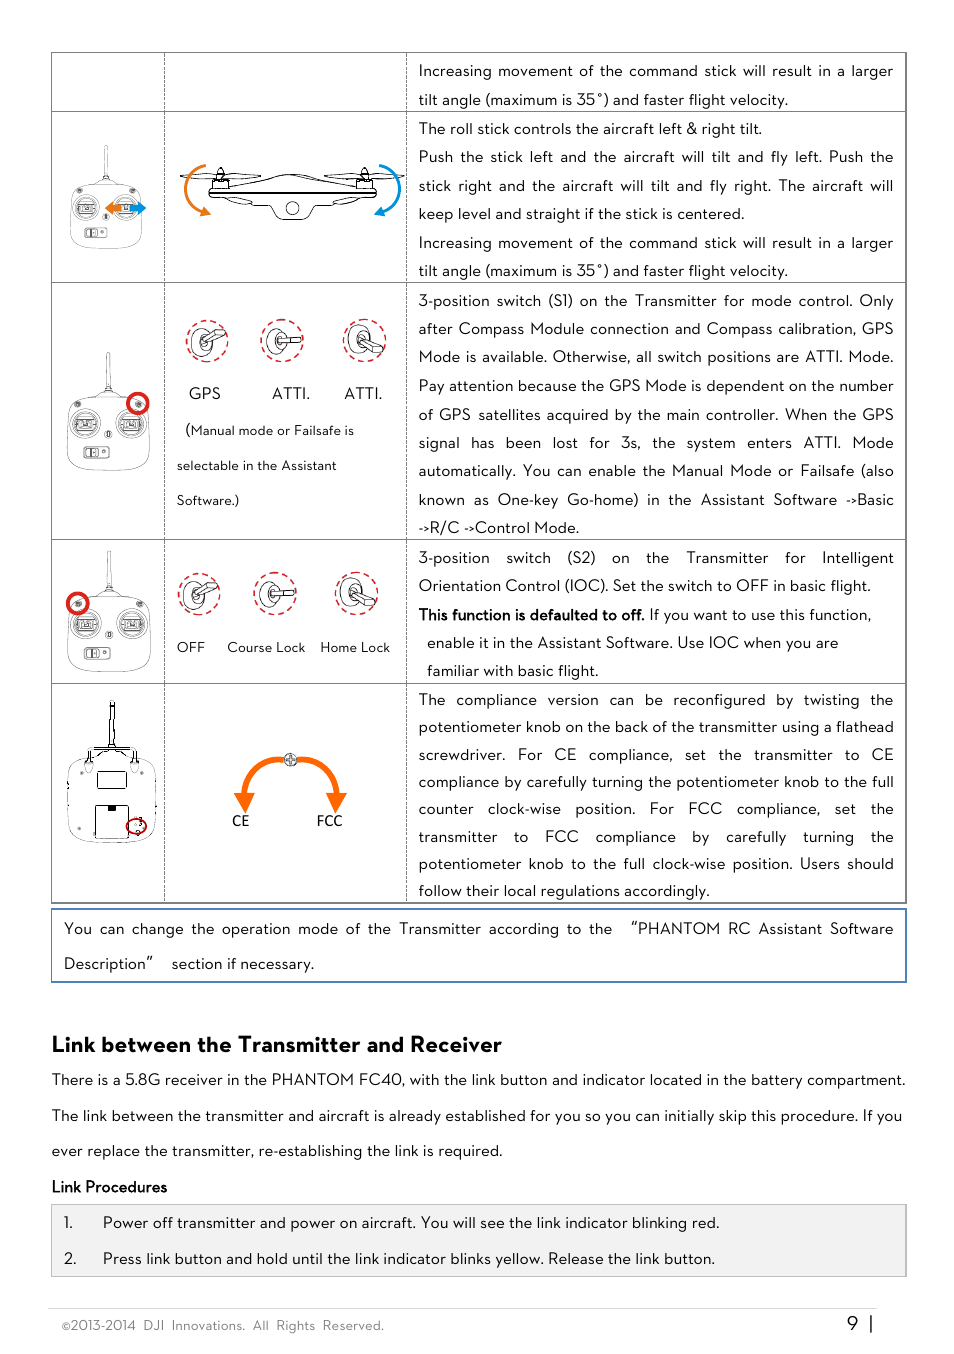 Link between the transmitter and receiver | DJI Phantom FC40 User Manual |  Page 9 / 31 | Original mode